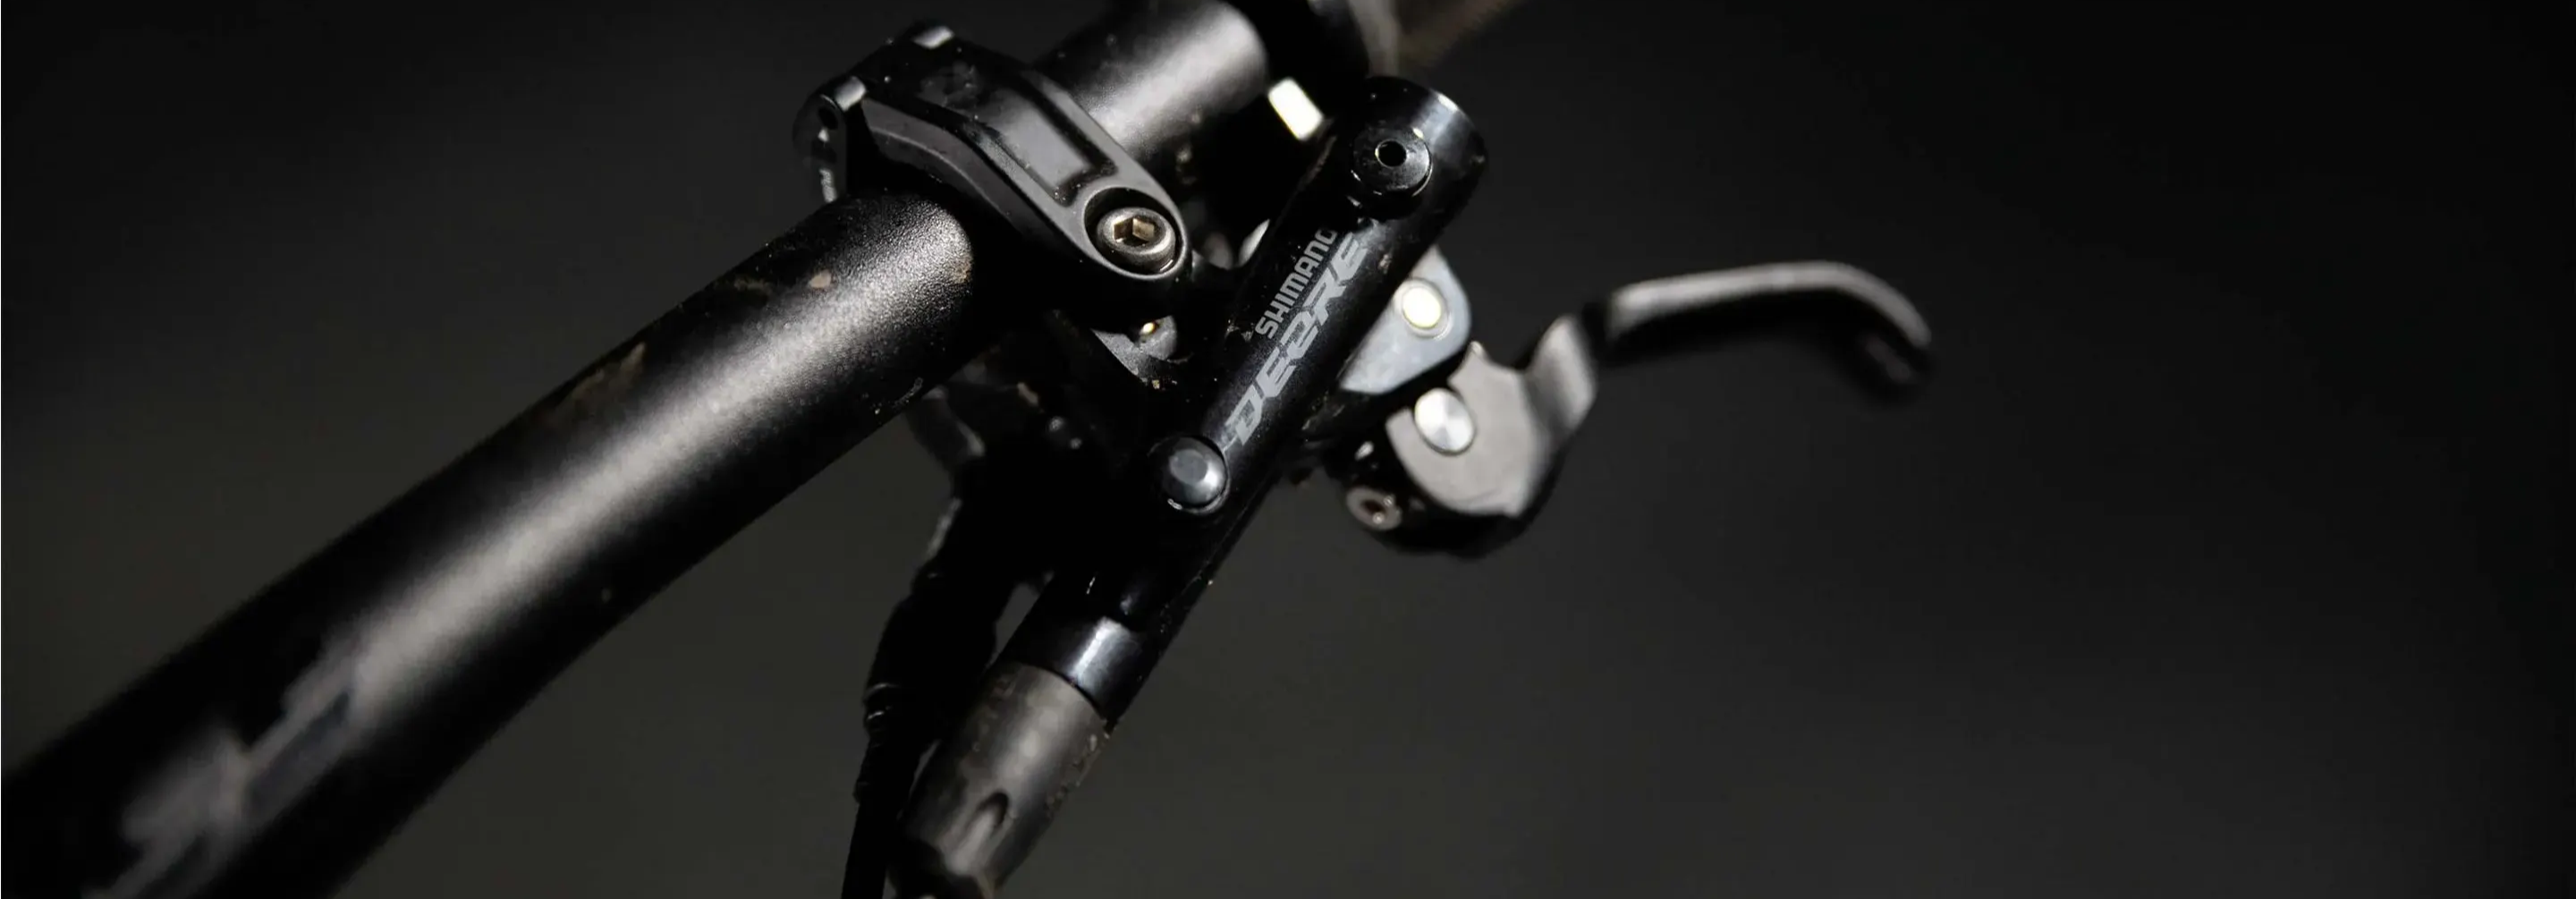 shimano deore mountain bike brake lever on a dark background